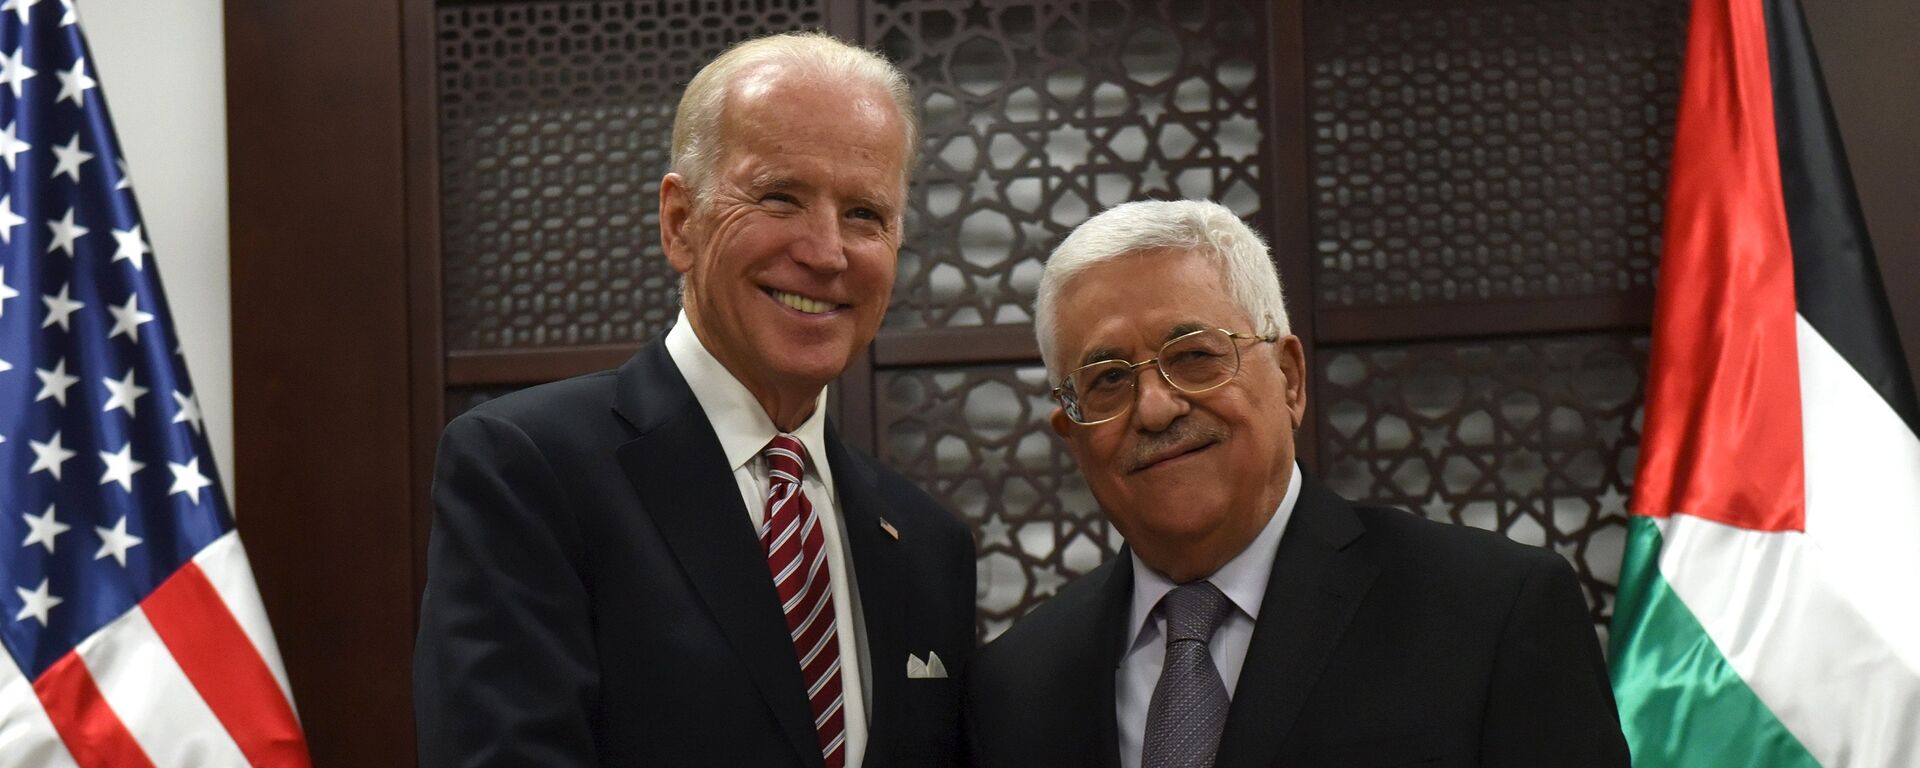 Vicepresidente de EEUU, Joe Biden, y presidente de Palestina, Mahmud Abás - Sputnik Mundo, 1920, 14.12.2021